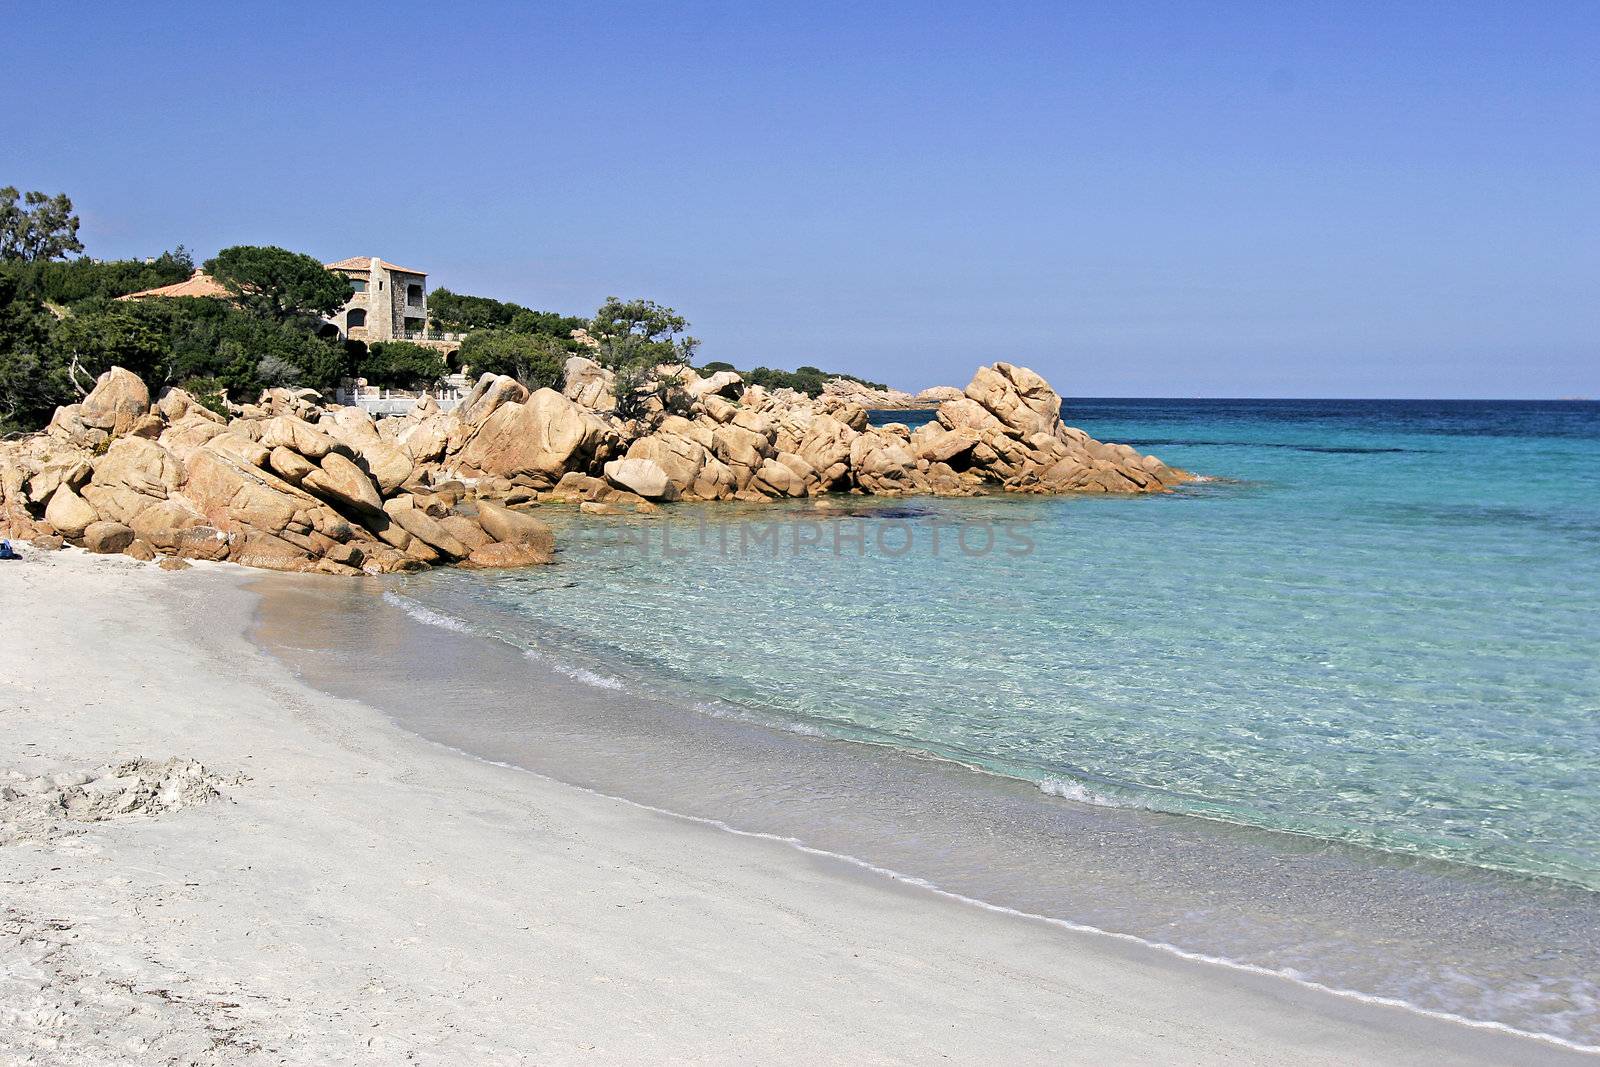 Costa Smeralda, emerald coast of Sardinia. by Natureandmore